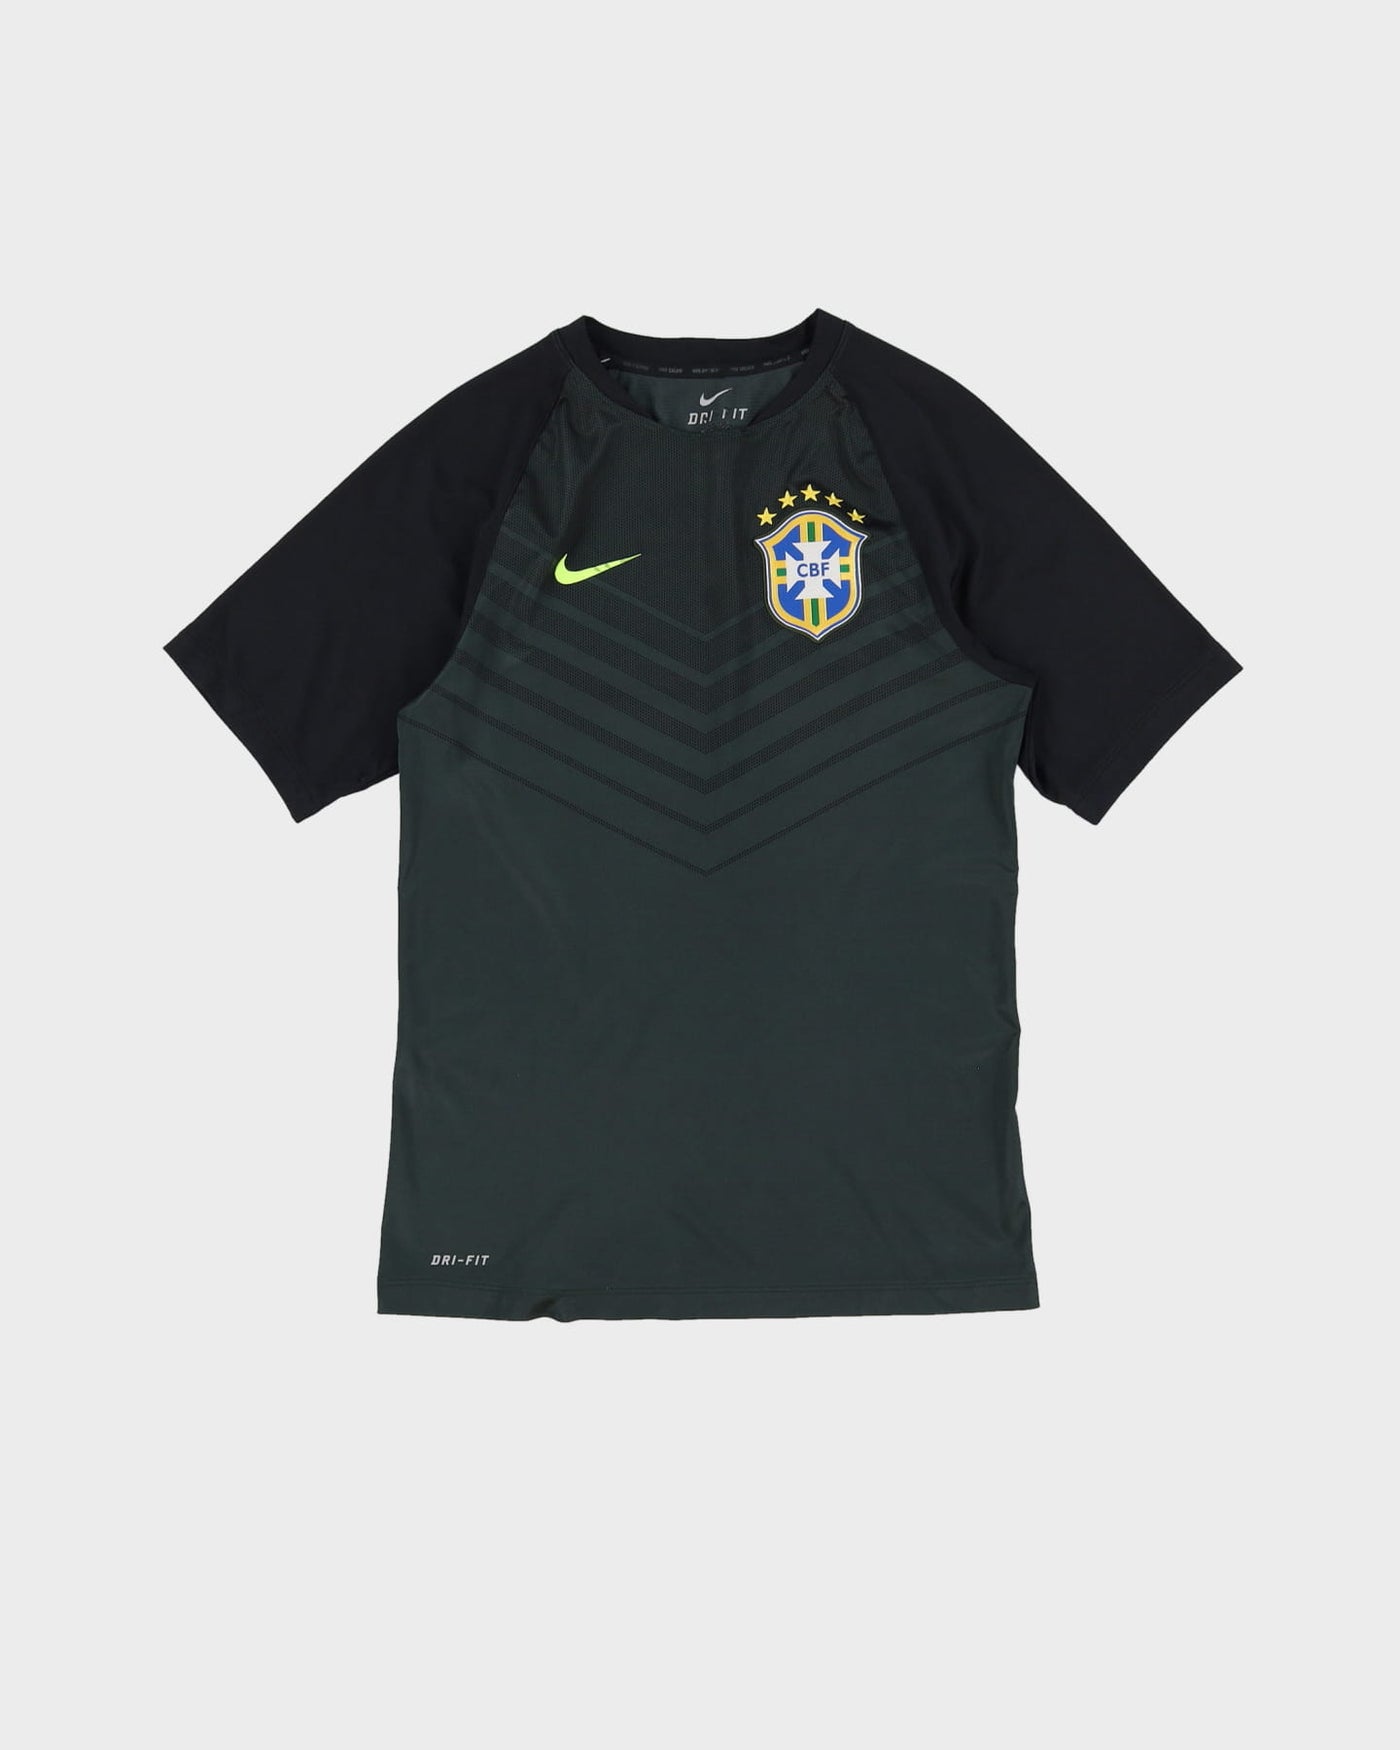 Brazil Nike Black Dri-Fit Training Football Shirt / Jersey - S – Rokit